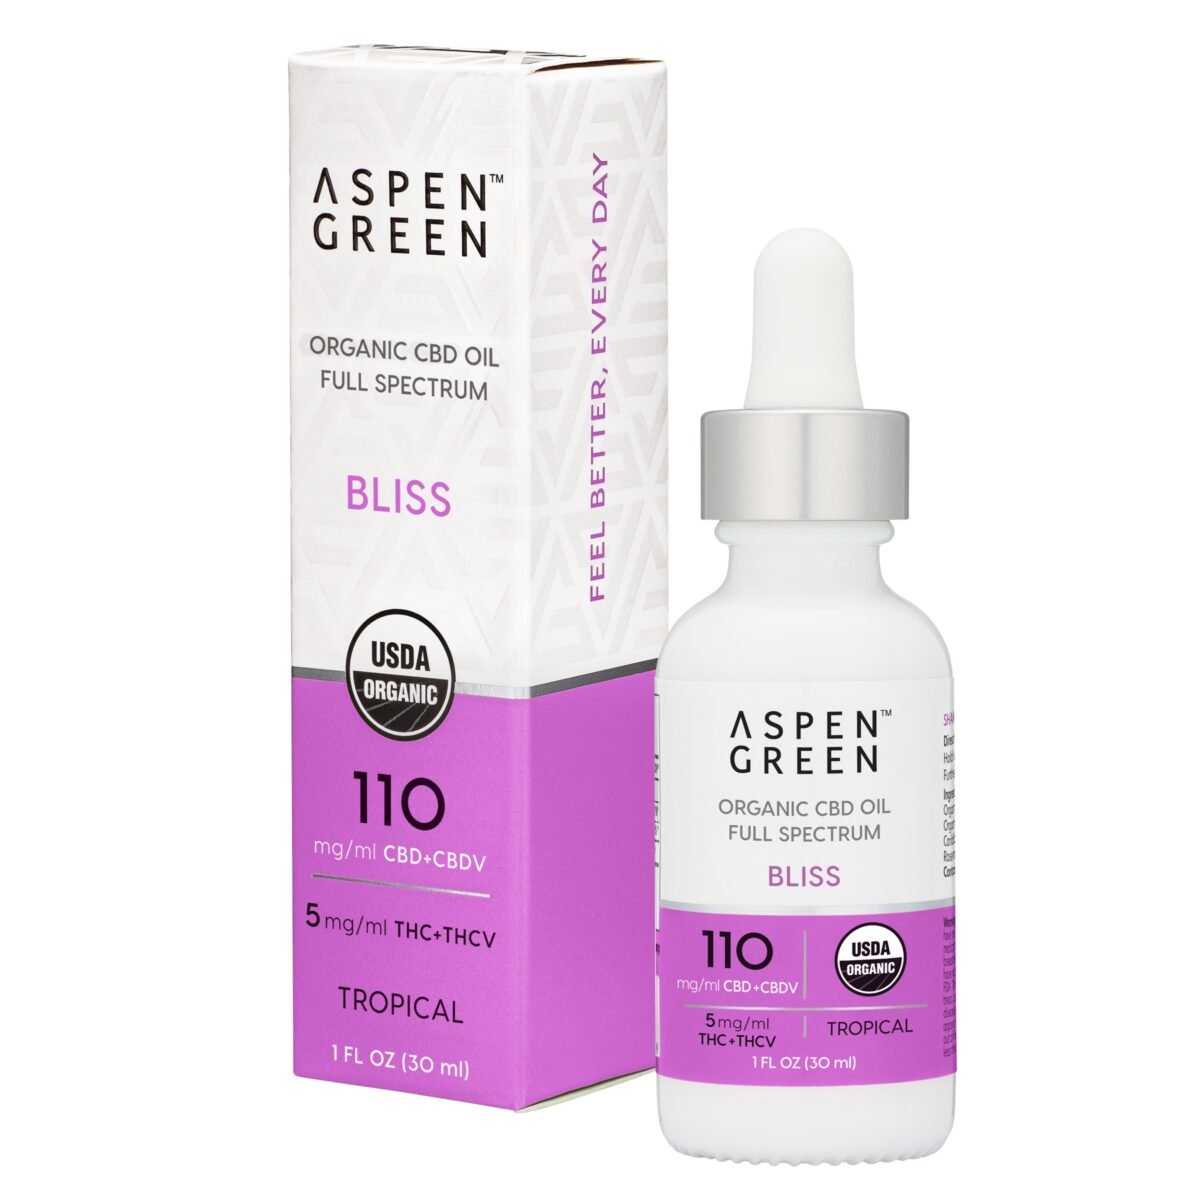 Aspen Green USDA Certified Organic CBD Oil with box, Bliss (110mg/ml CBD), Tropical Flavor